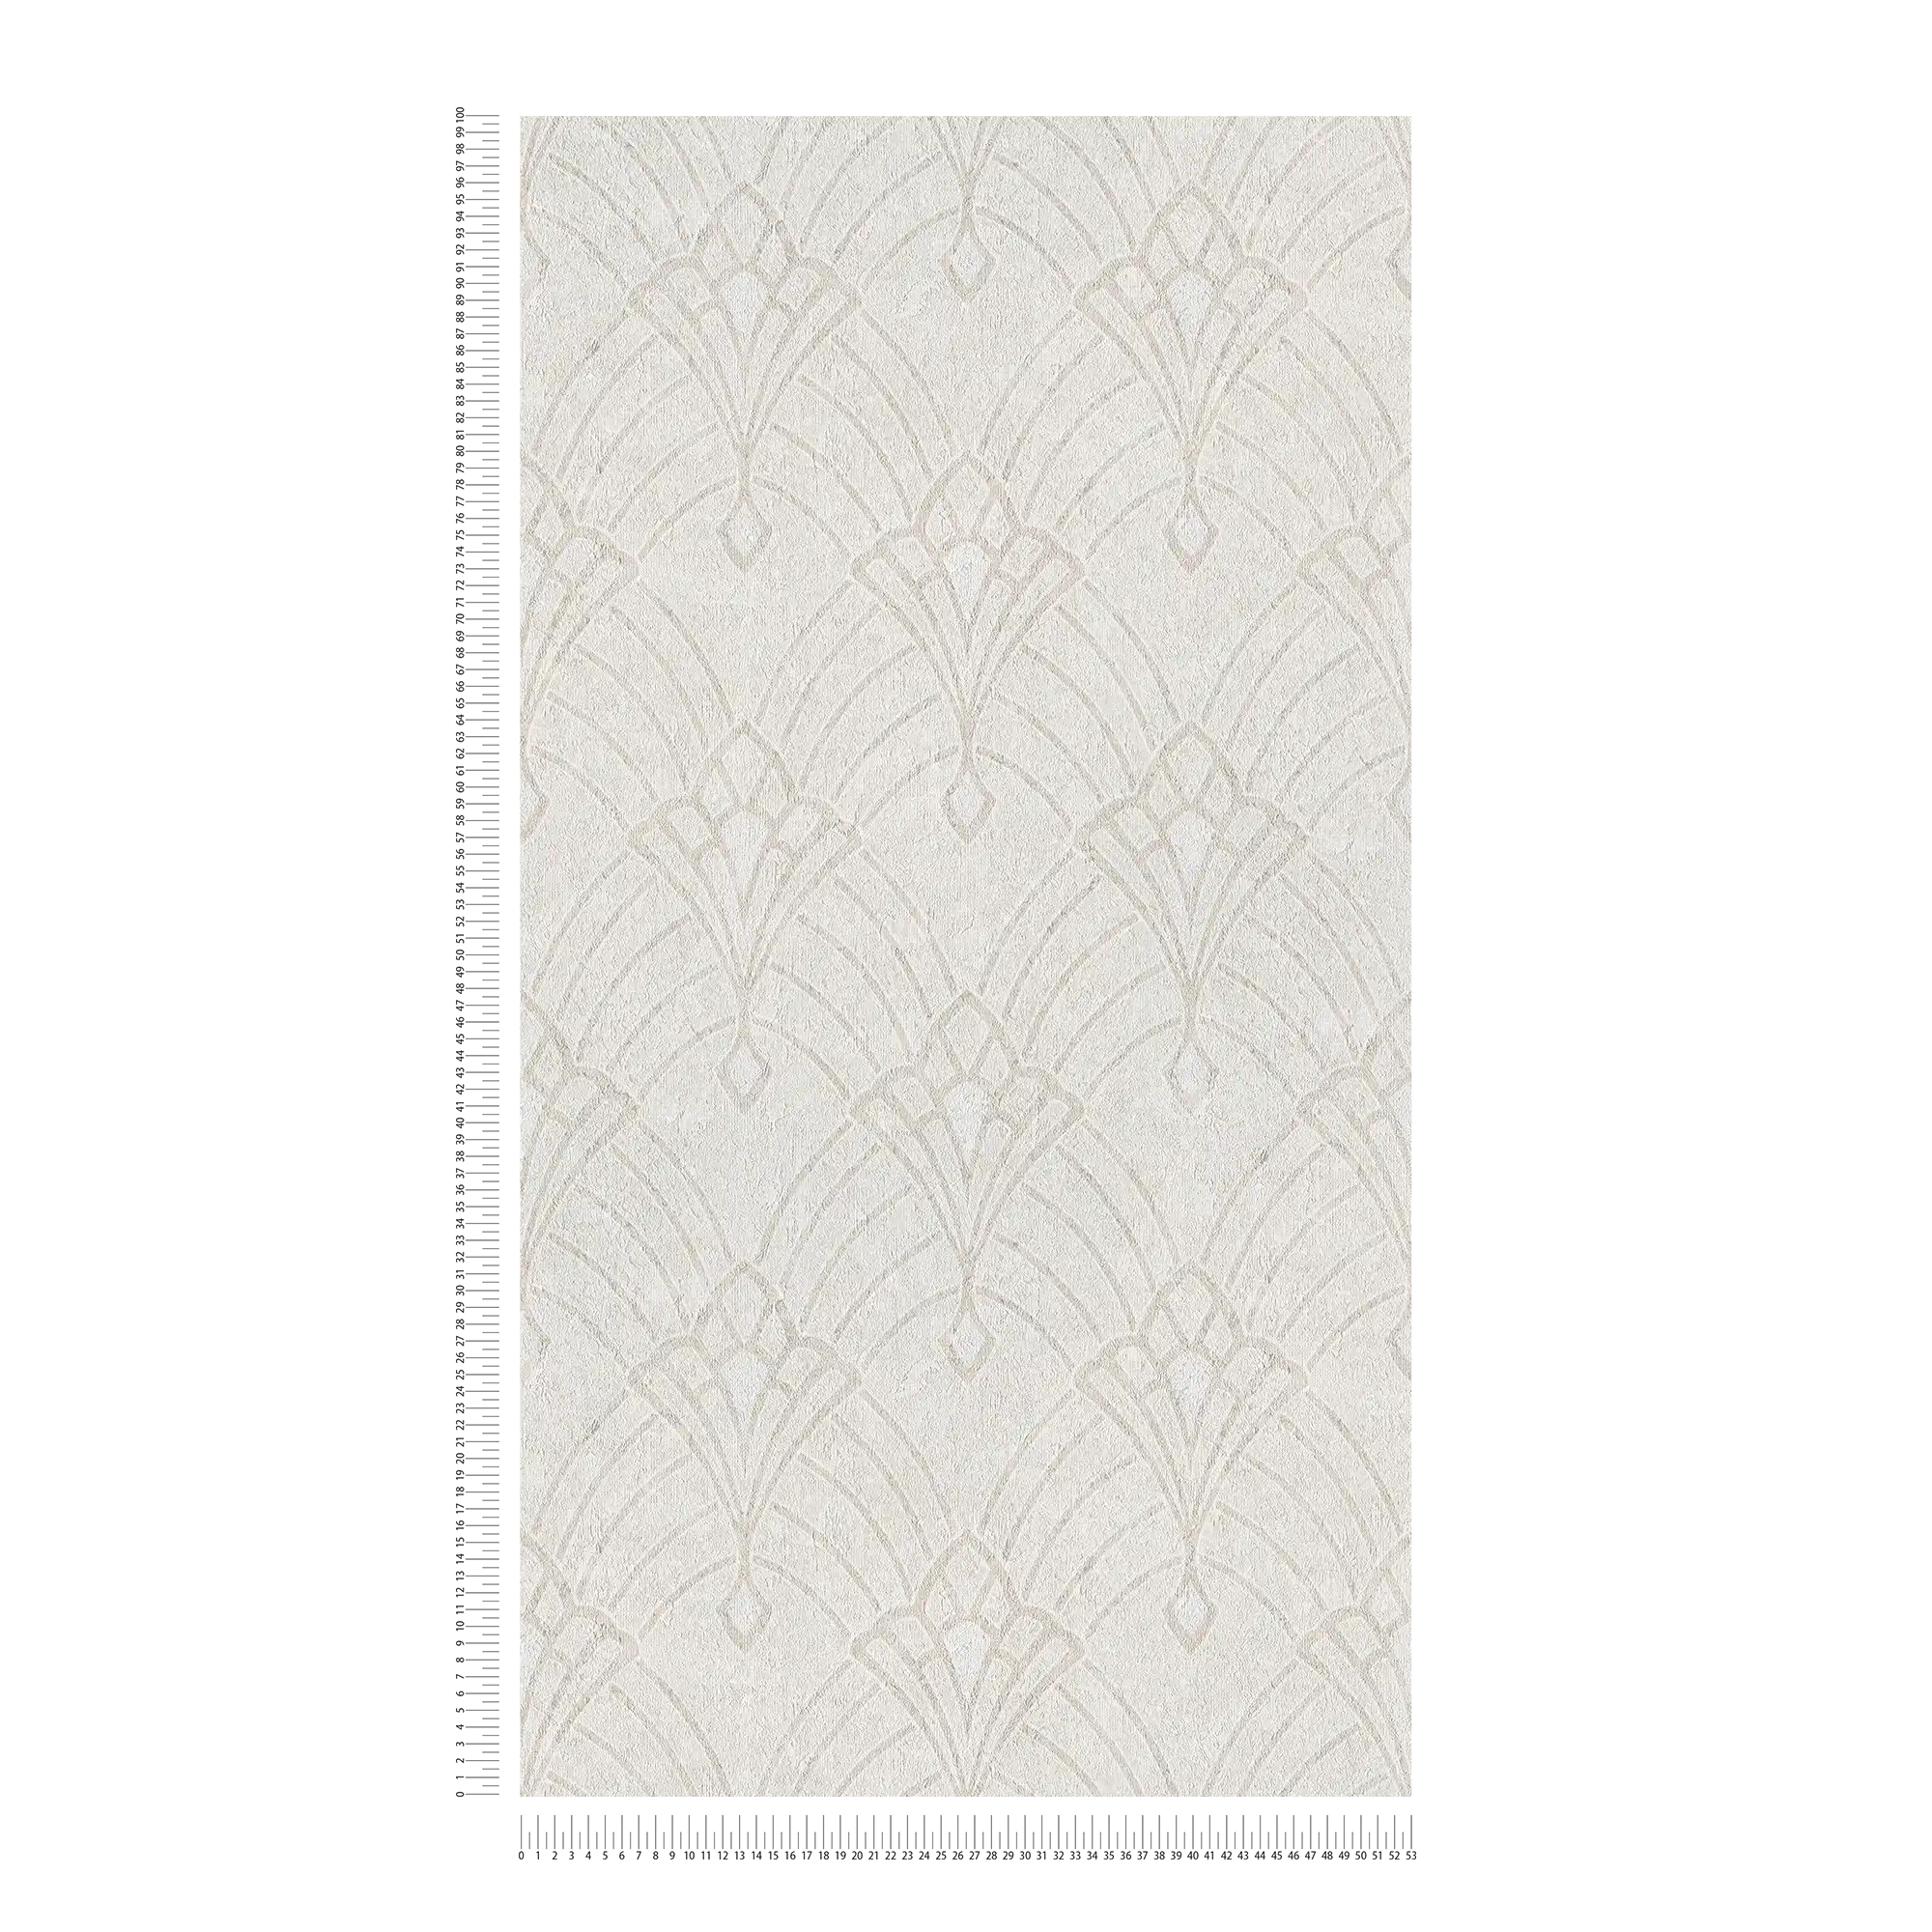             Putzoptik Tapete mit Art Deco Muster & Metallic Effekt – Beige, Creme, Gelb
        